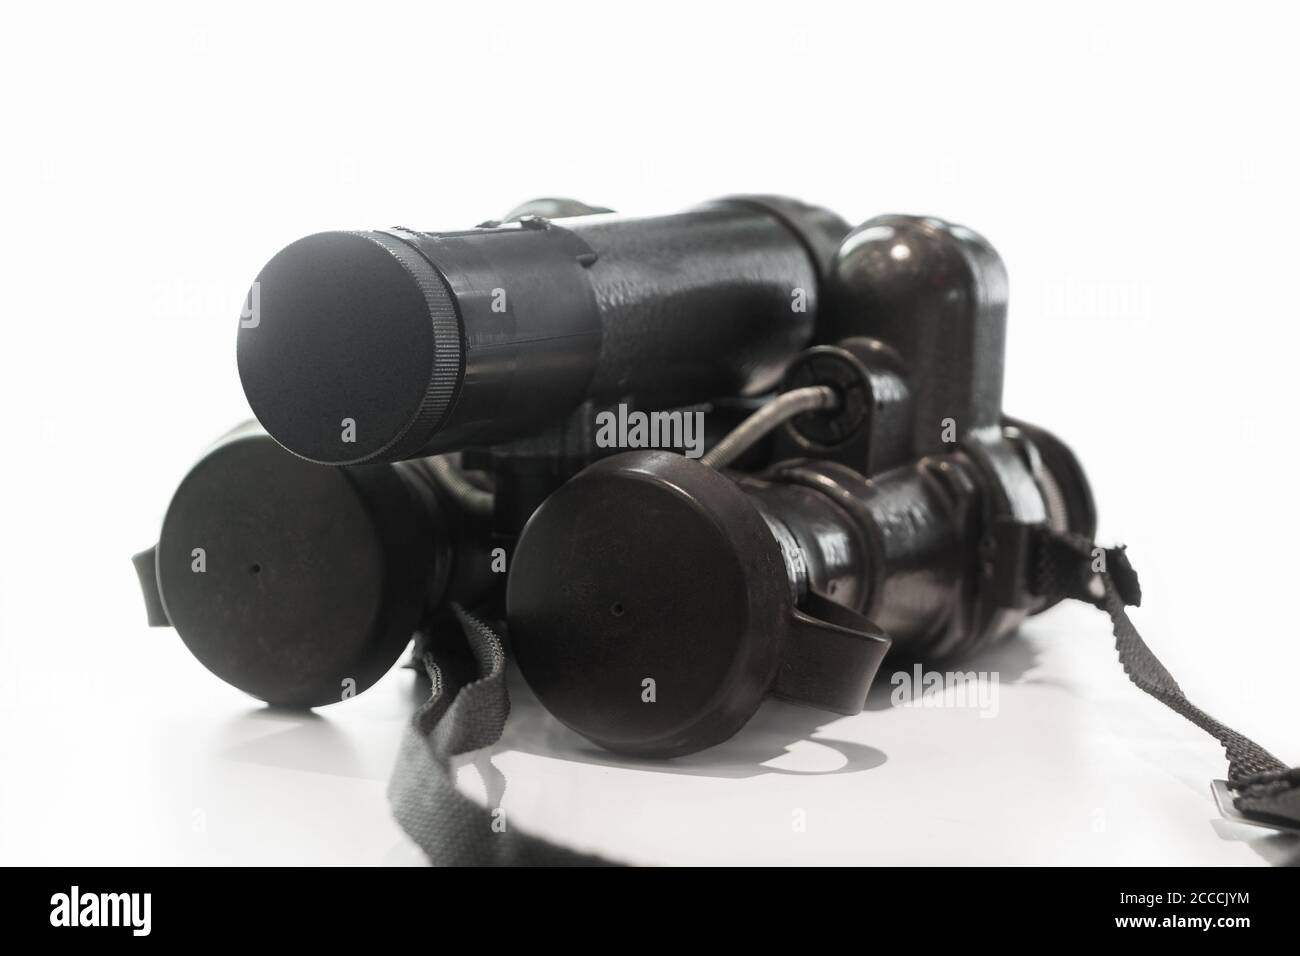 Military binoculars with night vision on white background Stock Photo